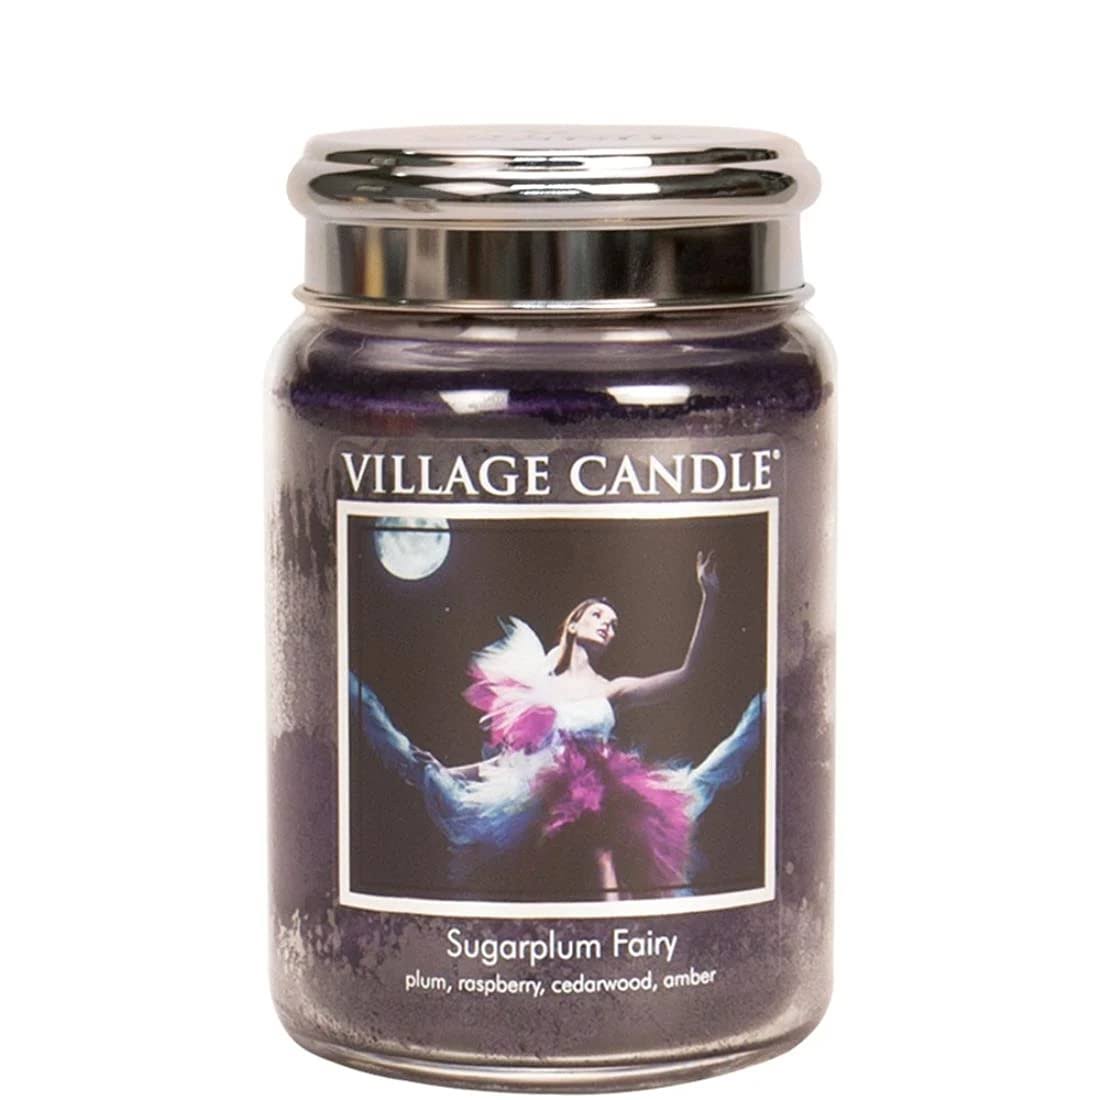 Village Candle Sugar Plum Fairy 26oz Large Jar Candle